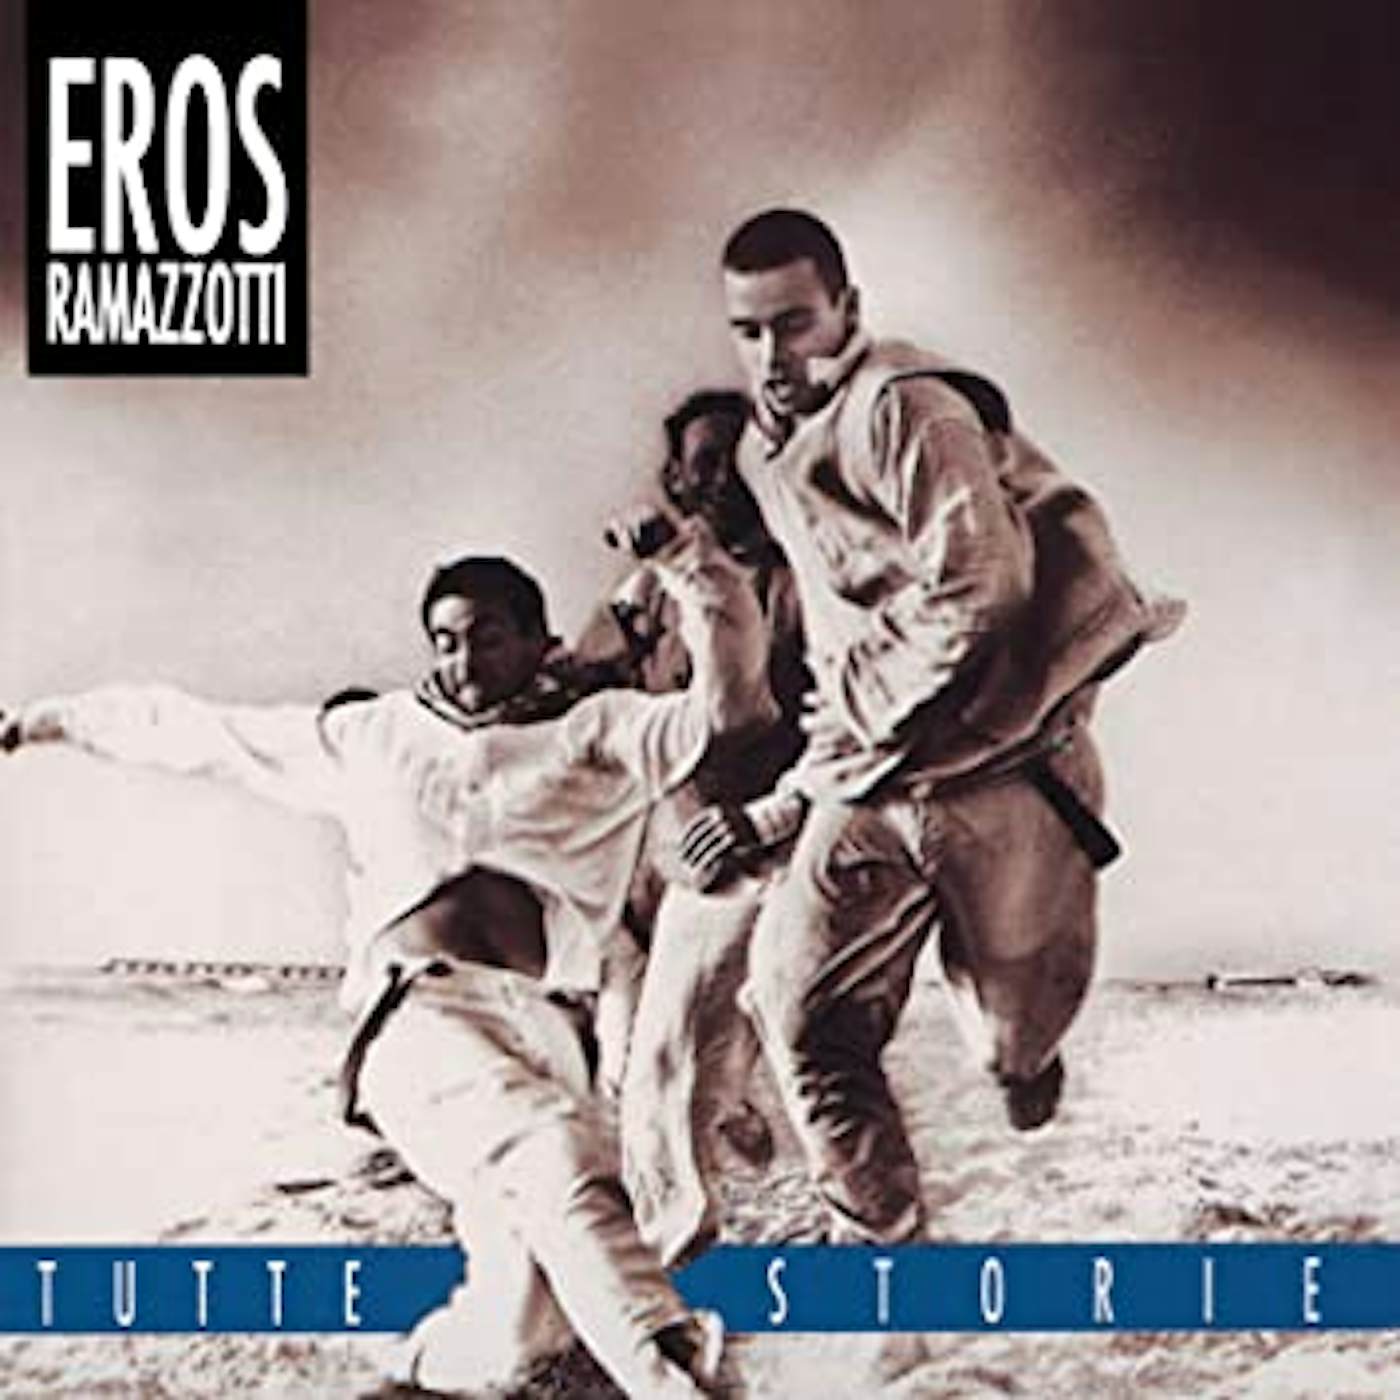 Eros Ramazzotti Tutte Storie Vinyl Record